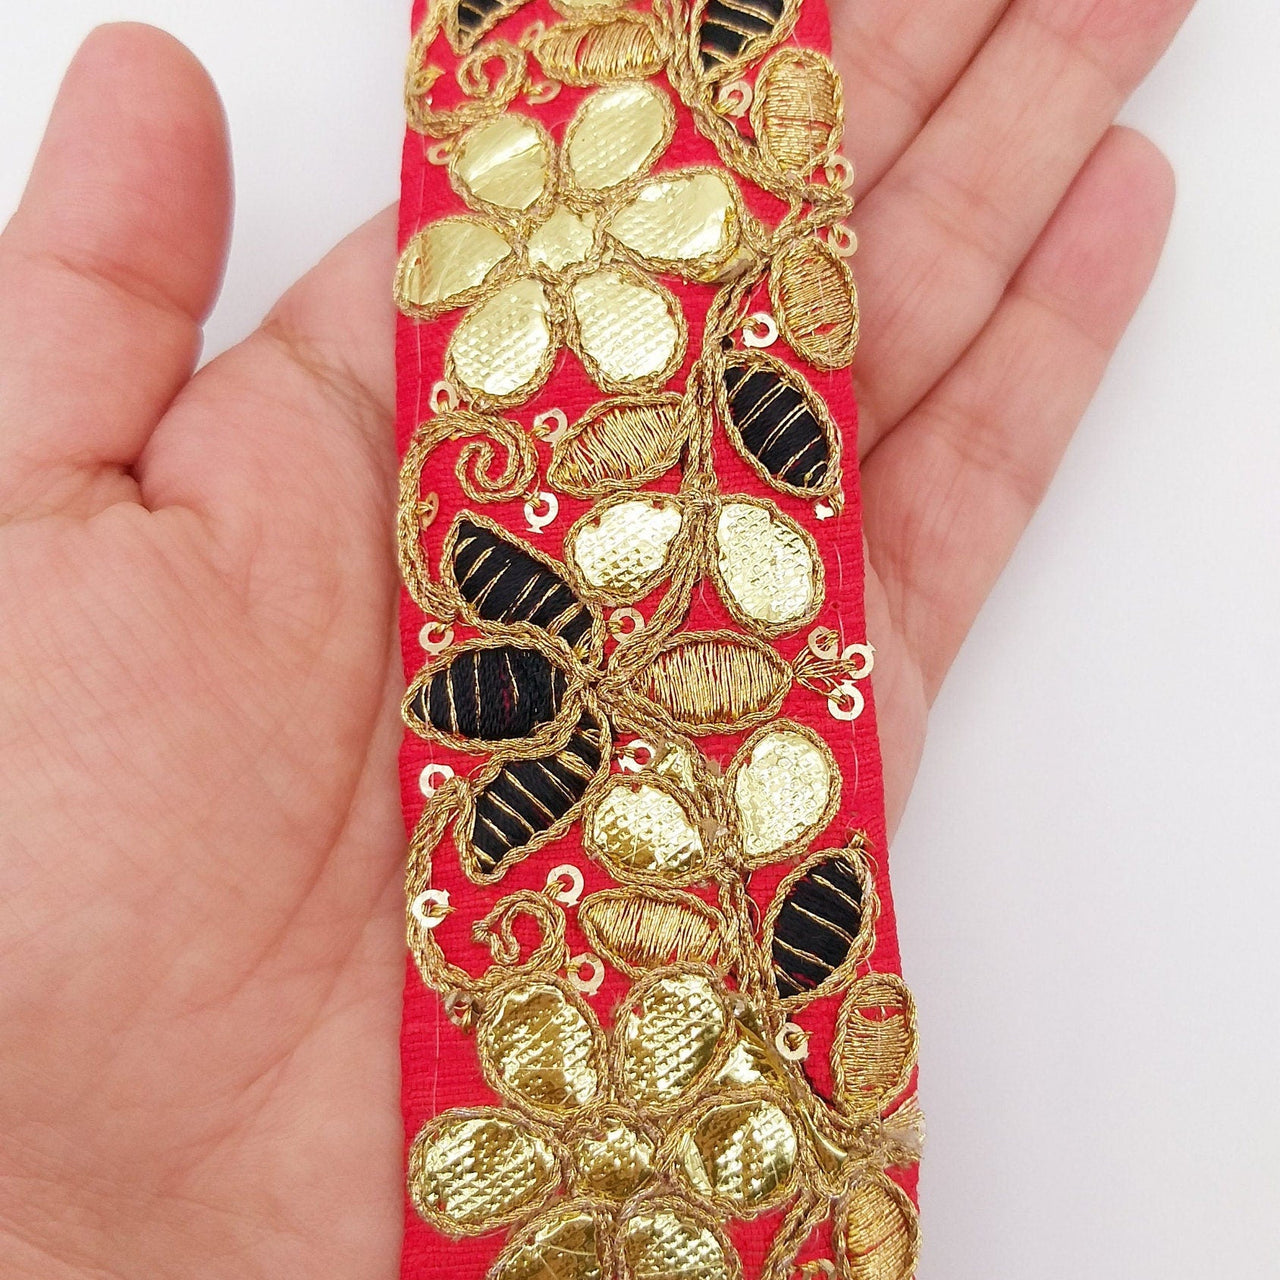 Red Fabric Trim In Black & Gold Floral Embroidery, Gota Patti Trim, Indian Flower Border